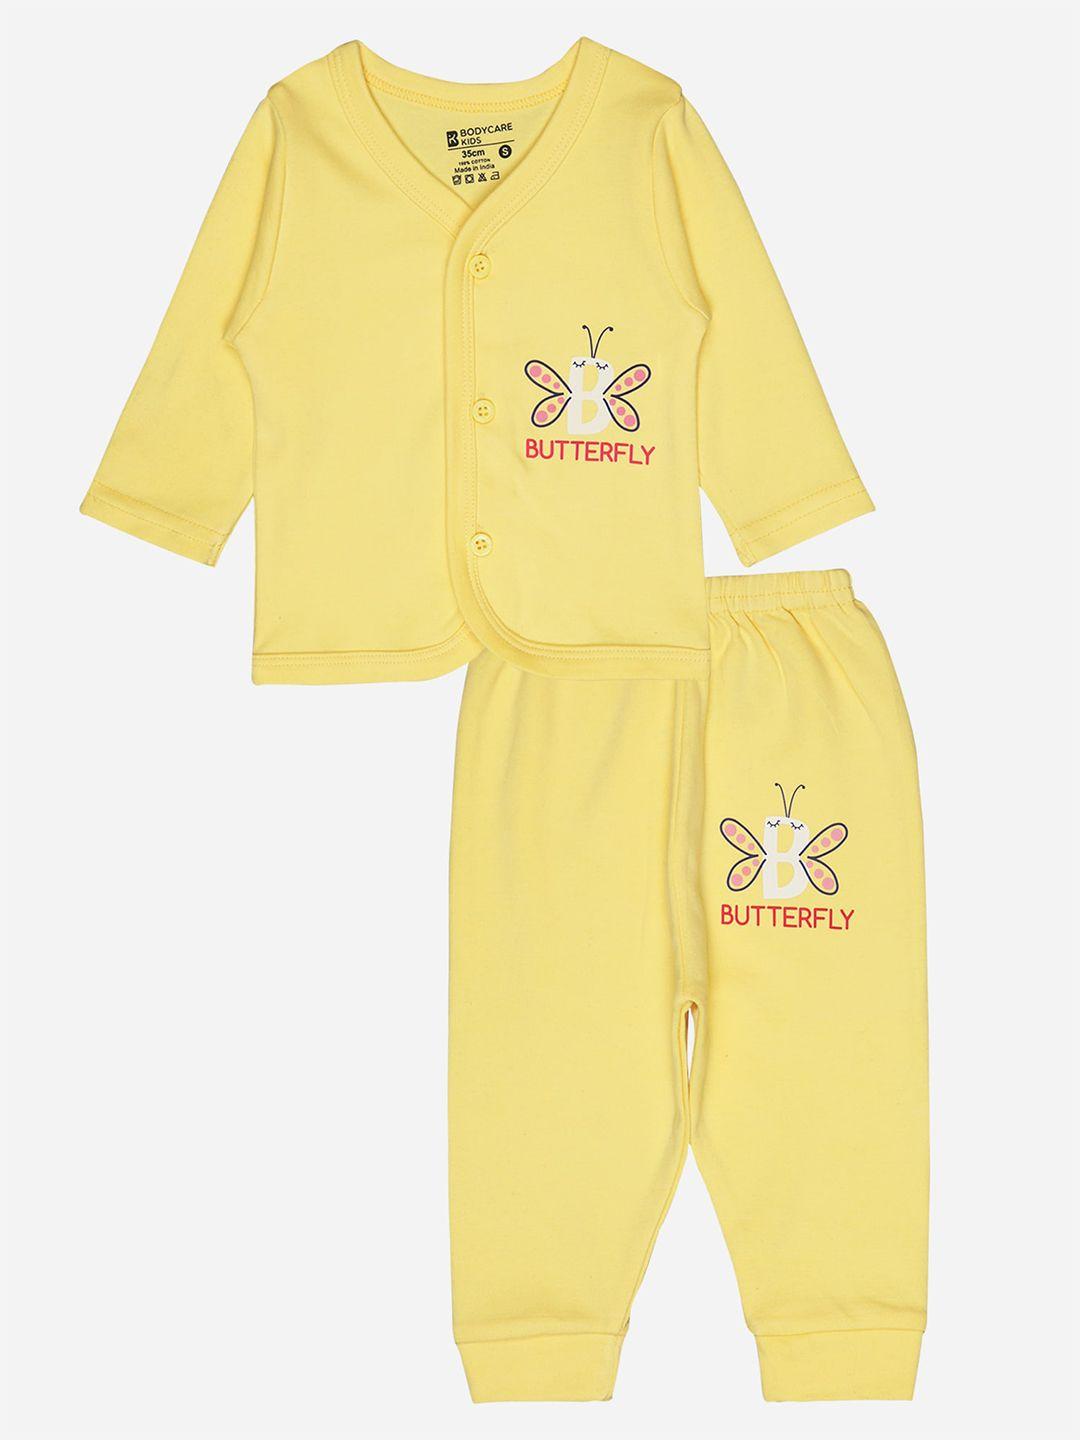 bodycare kids printed v-neck top with pyjamas